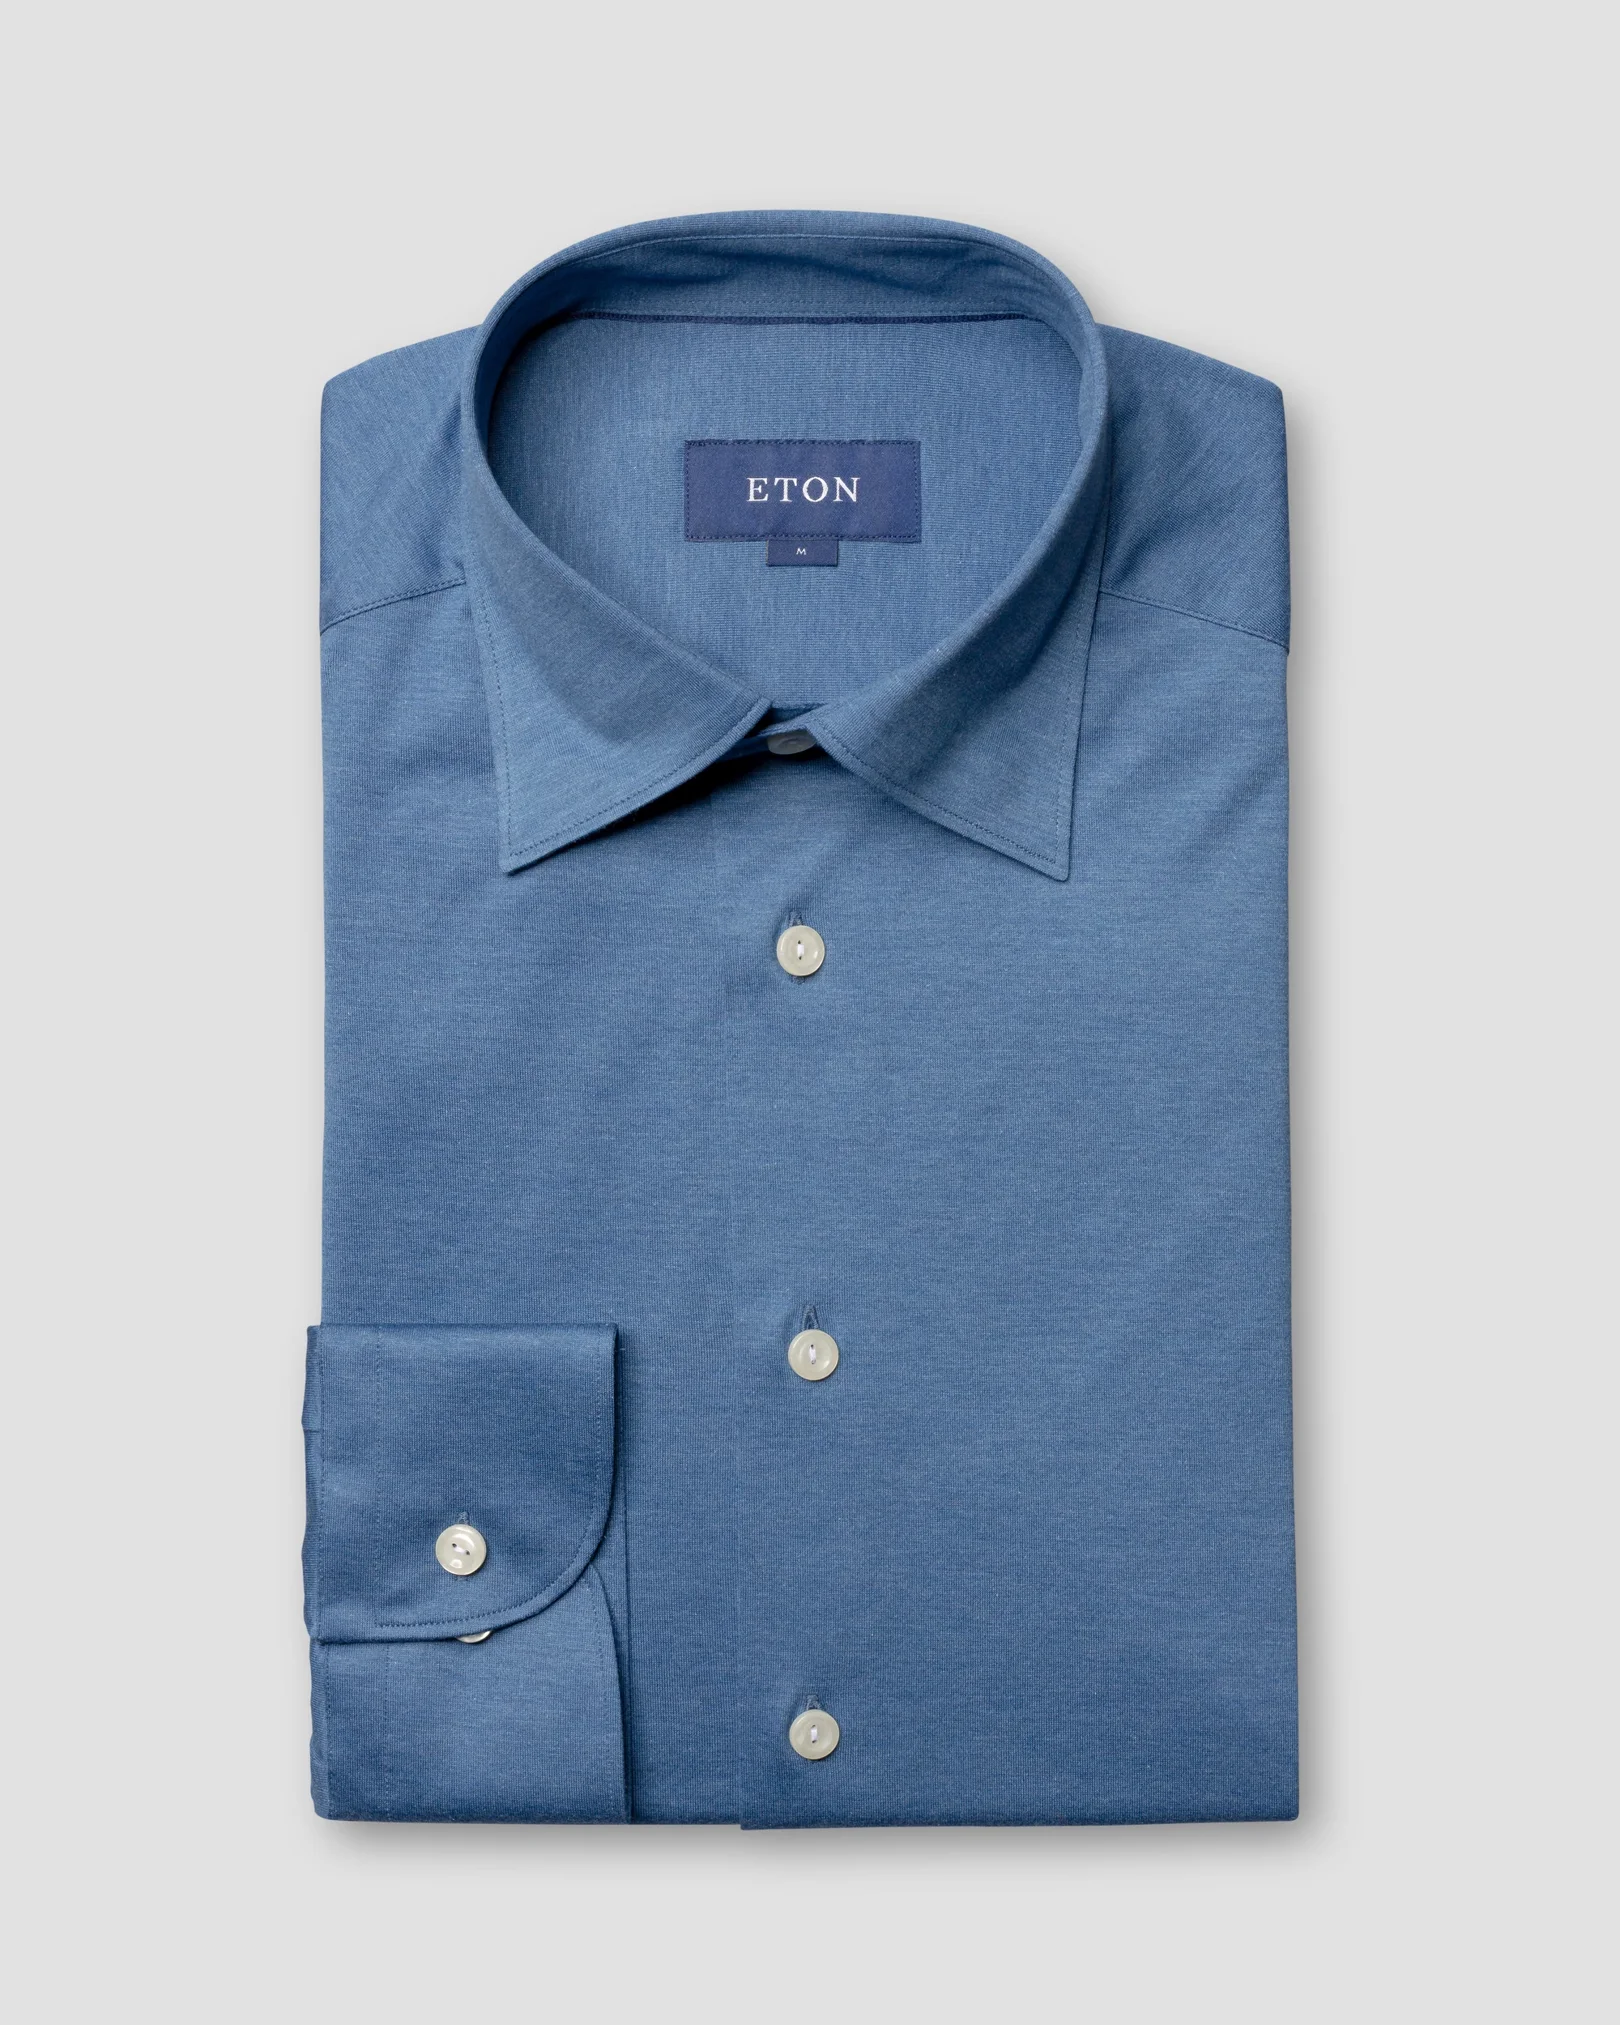 Eton - blue jersey shirt